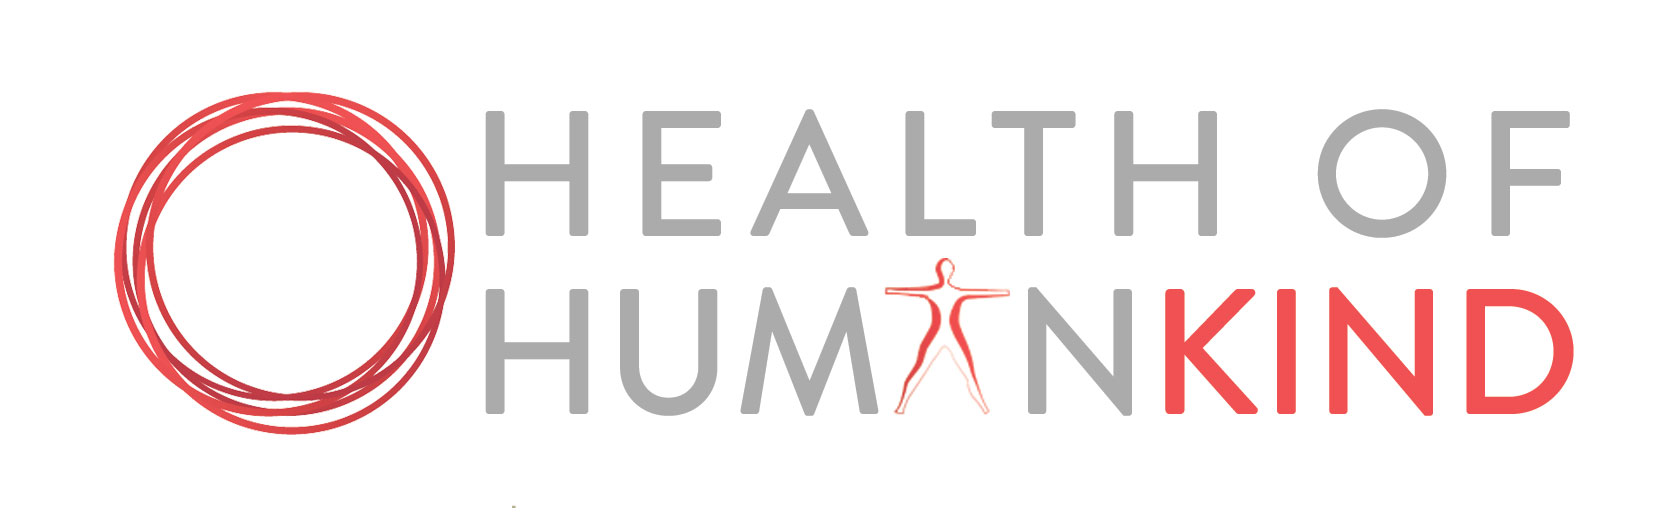 Health Of Humankind logo